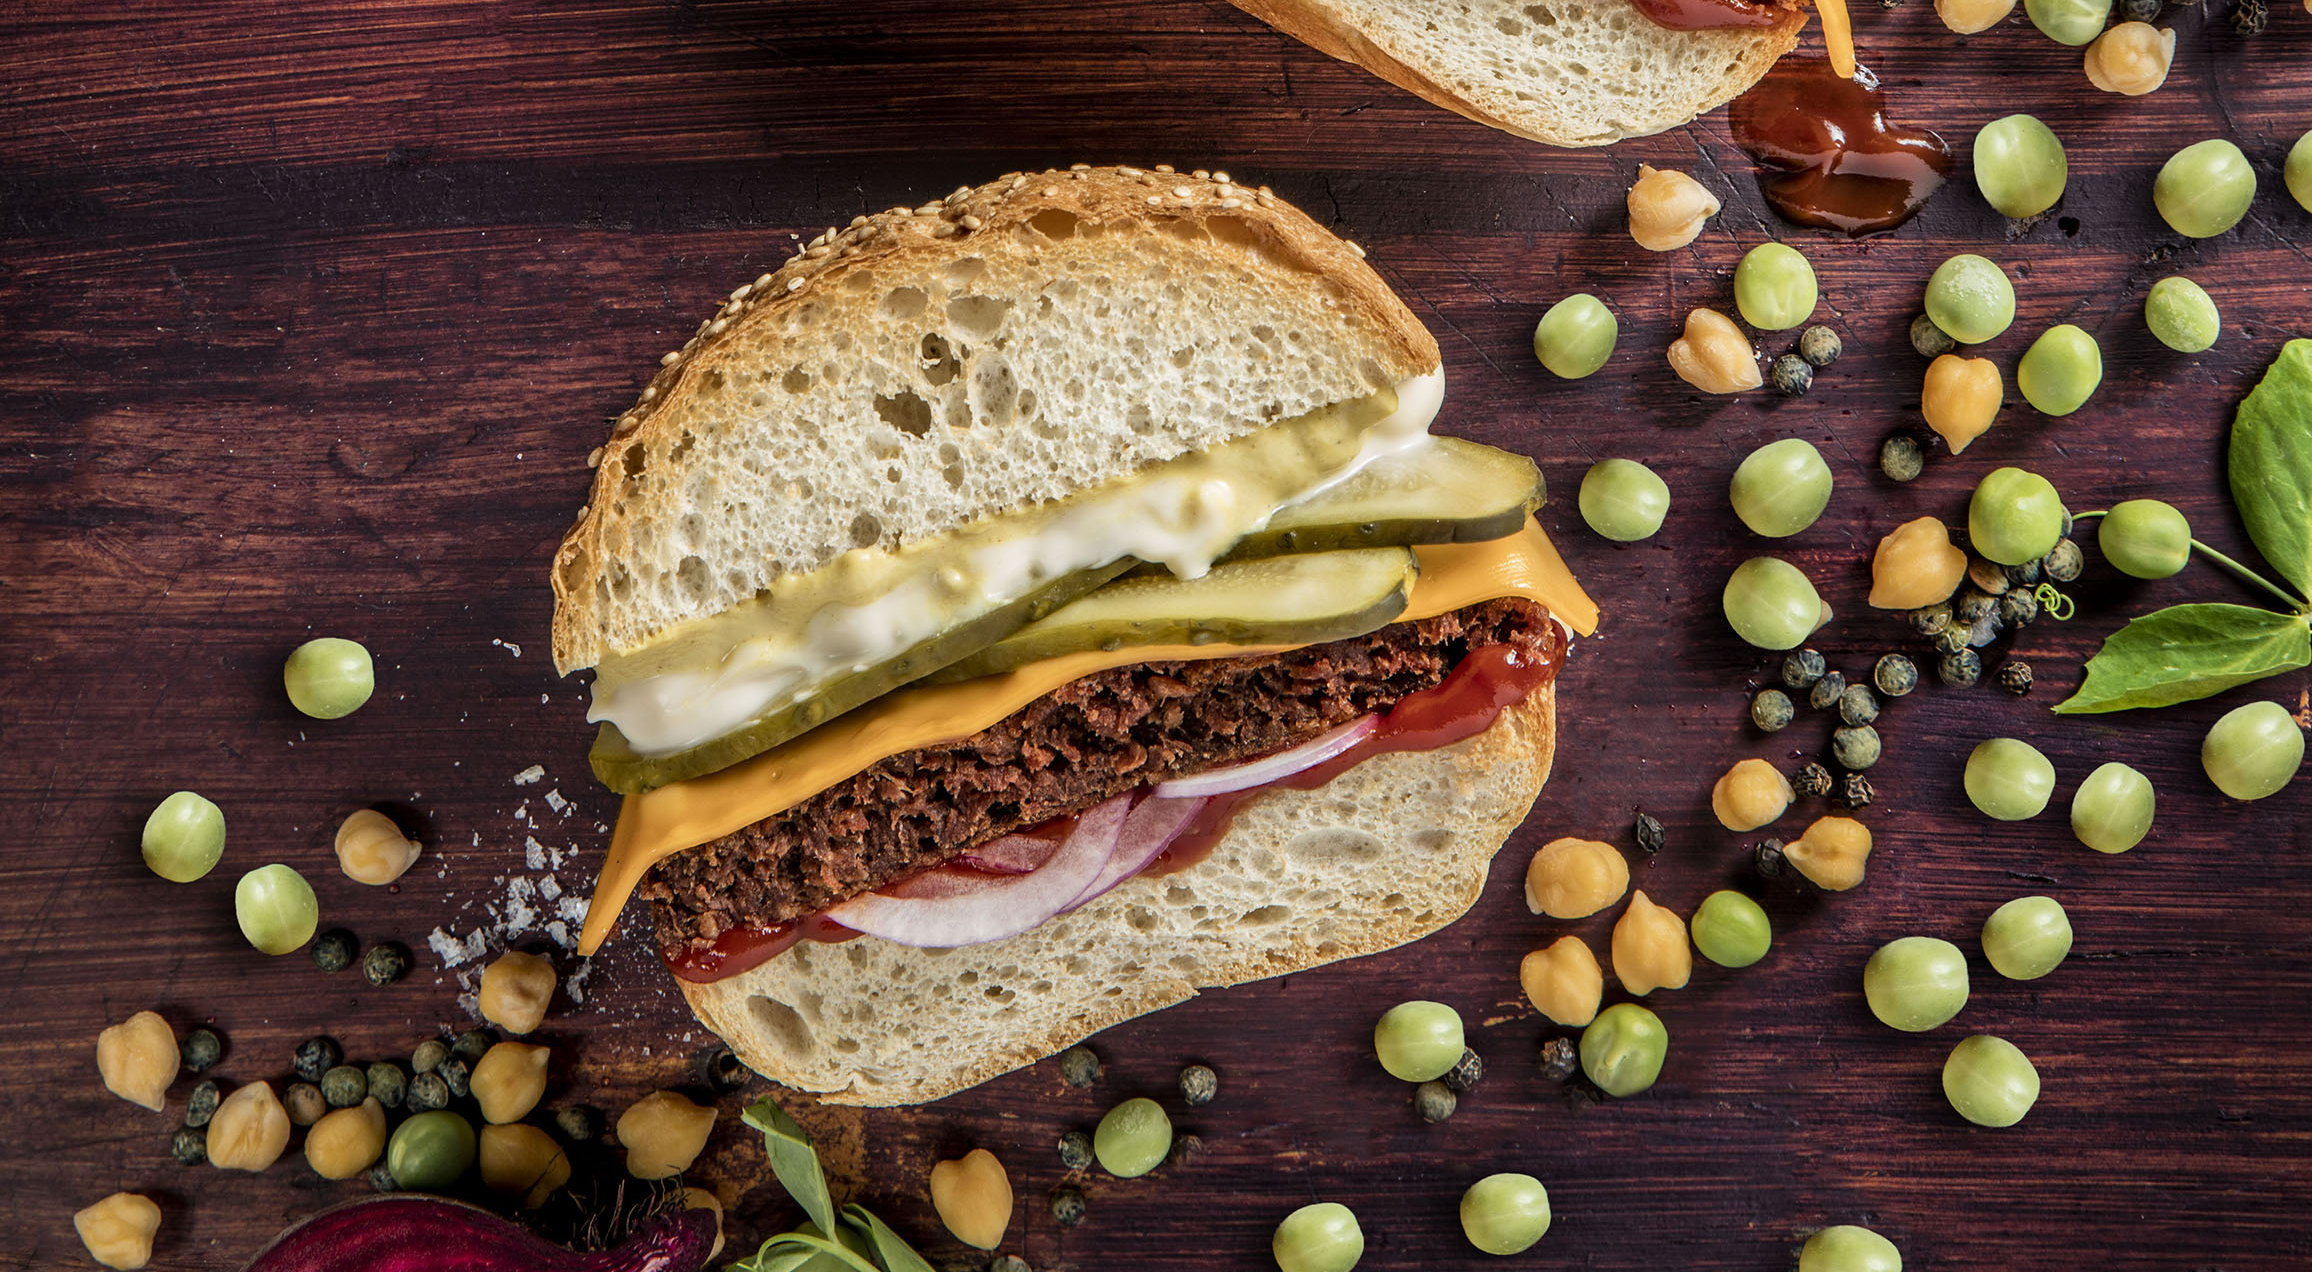 Grill’d Add A Vegan ‘Beef’ Burger & Now-Legal Hemp Burger To The Menu